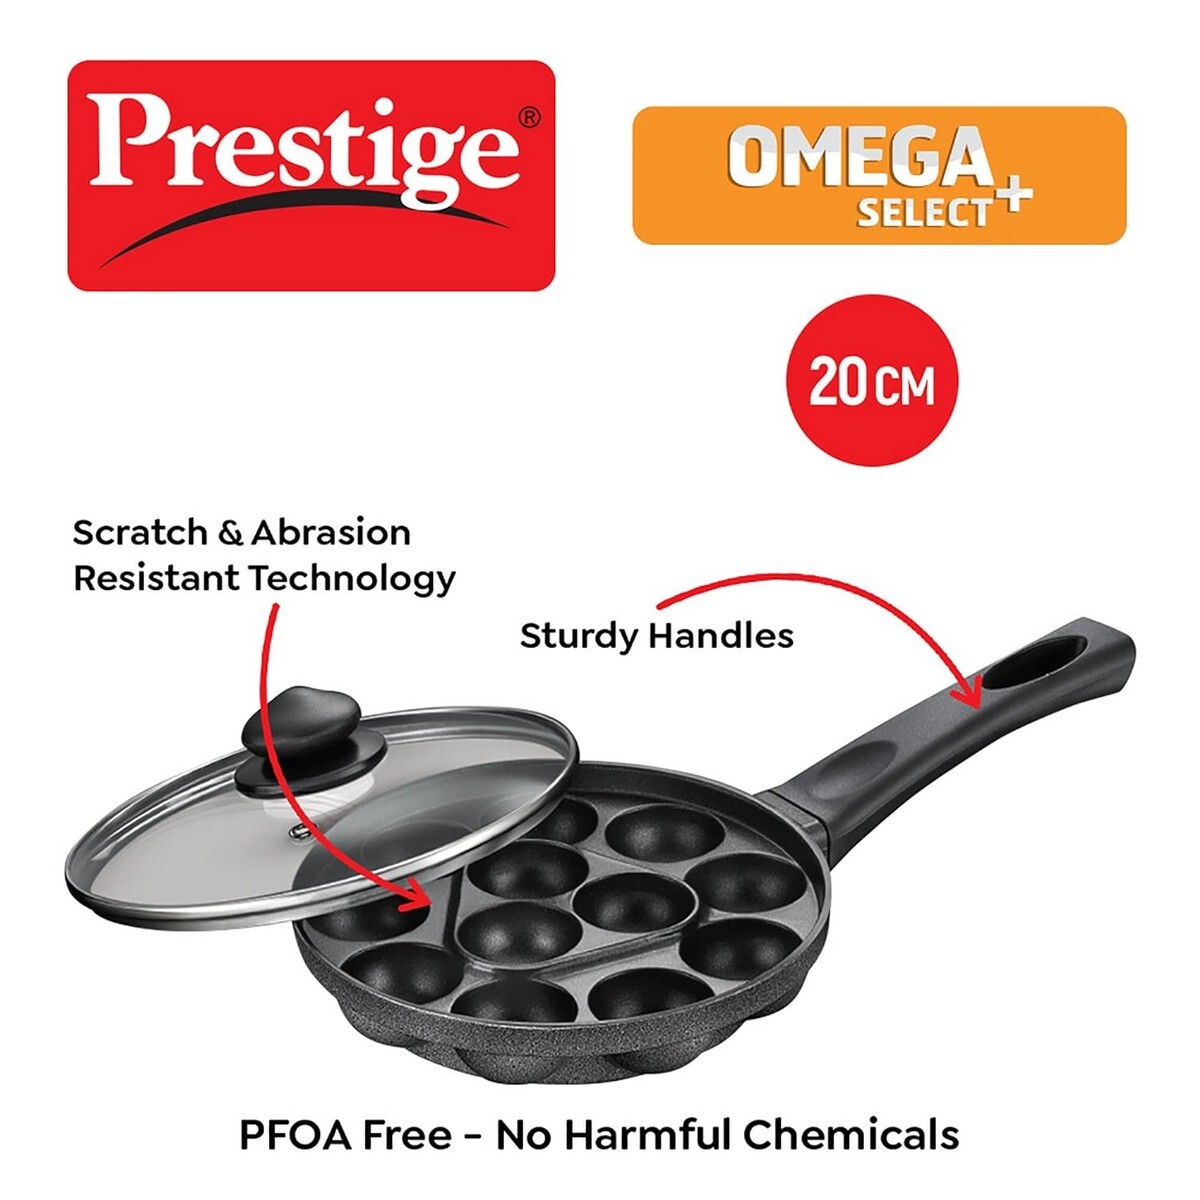 Prestige Omega Select Plus Paniyarakkal 12s Pit With Lid 0.2L